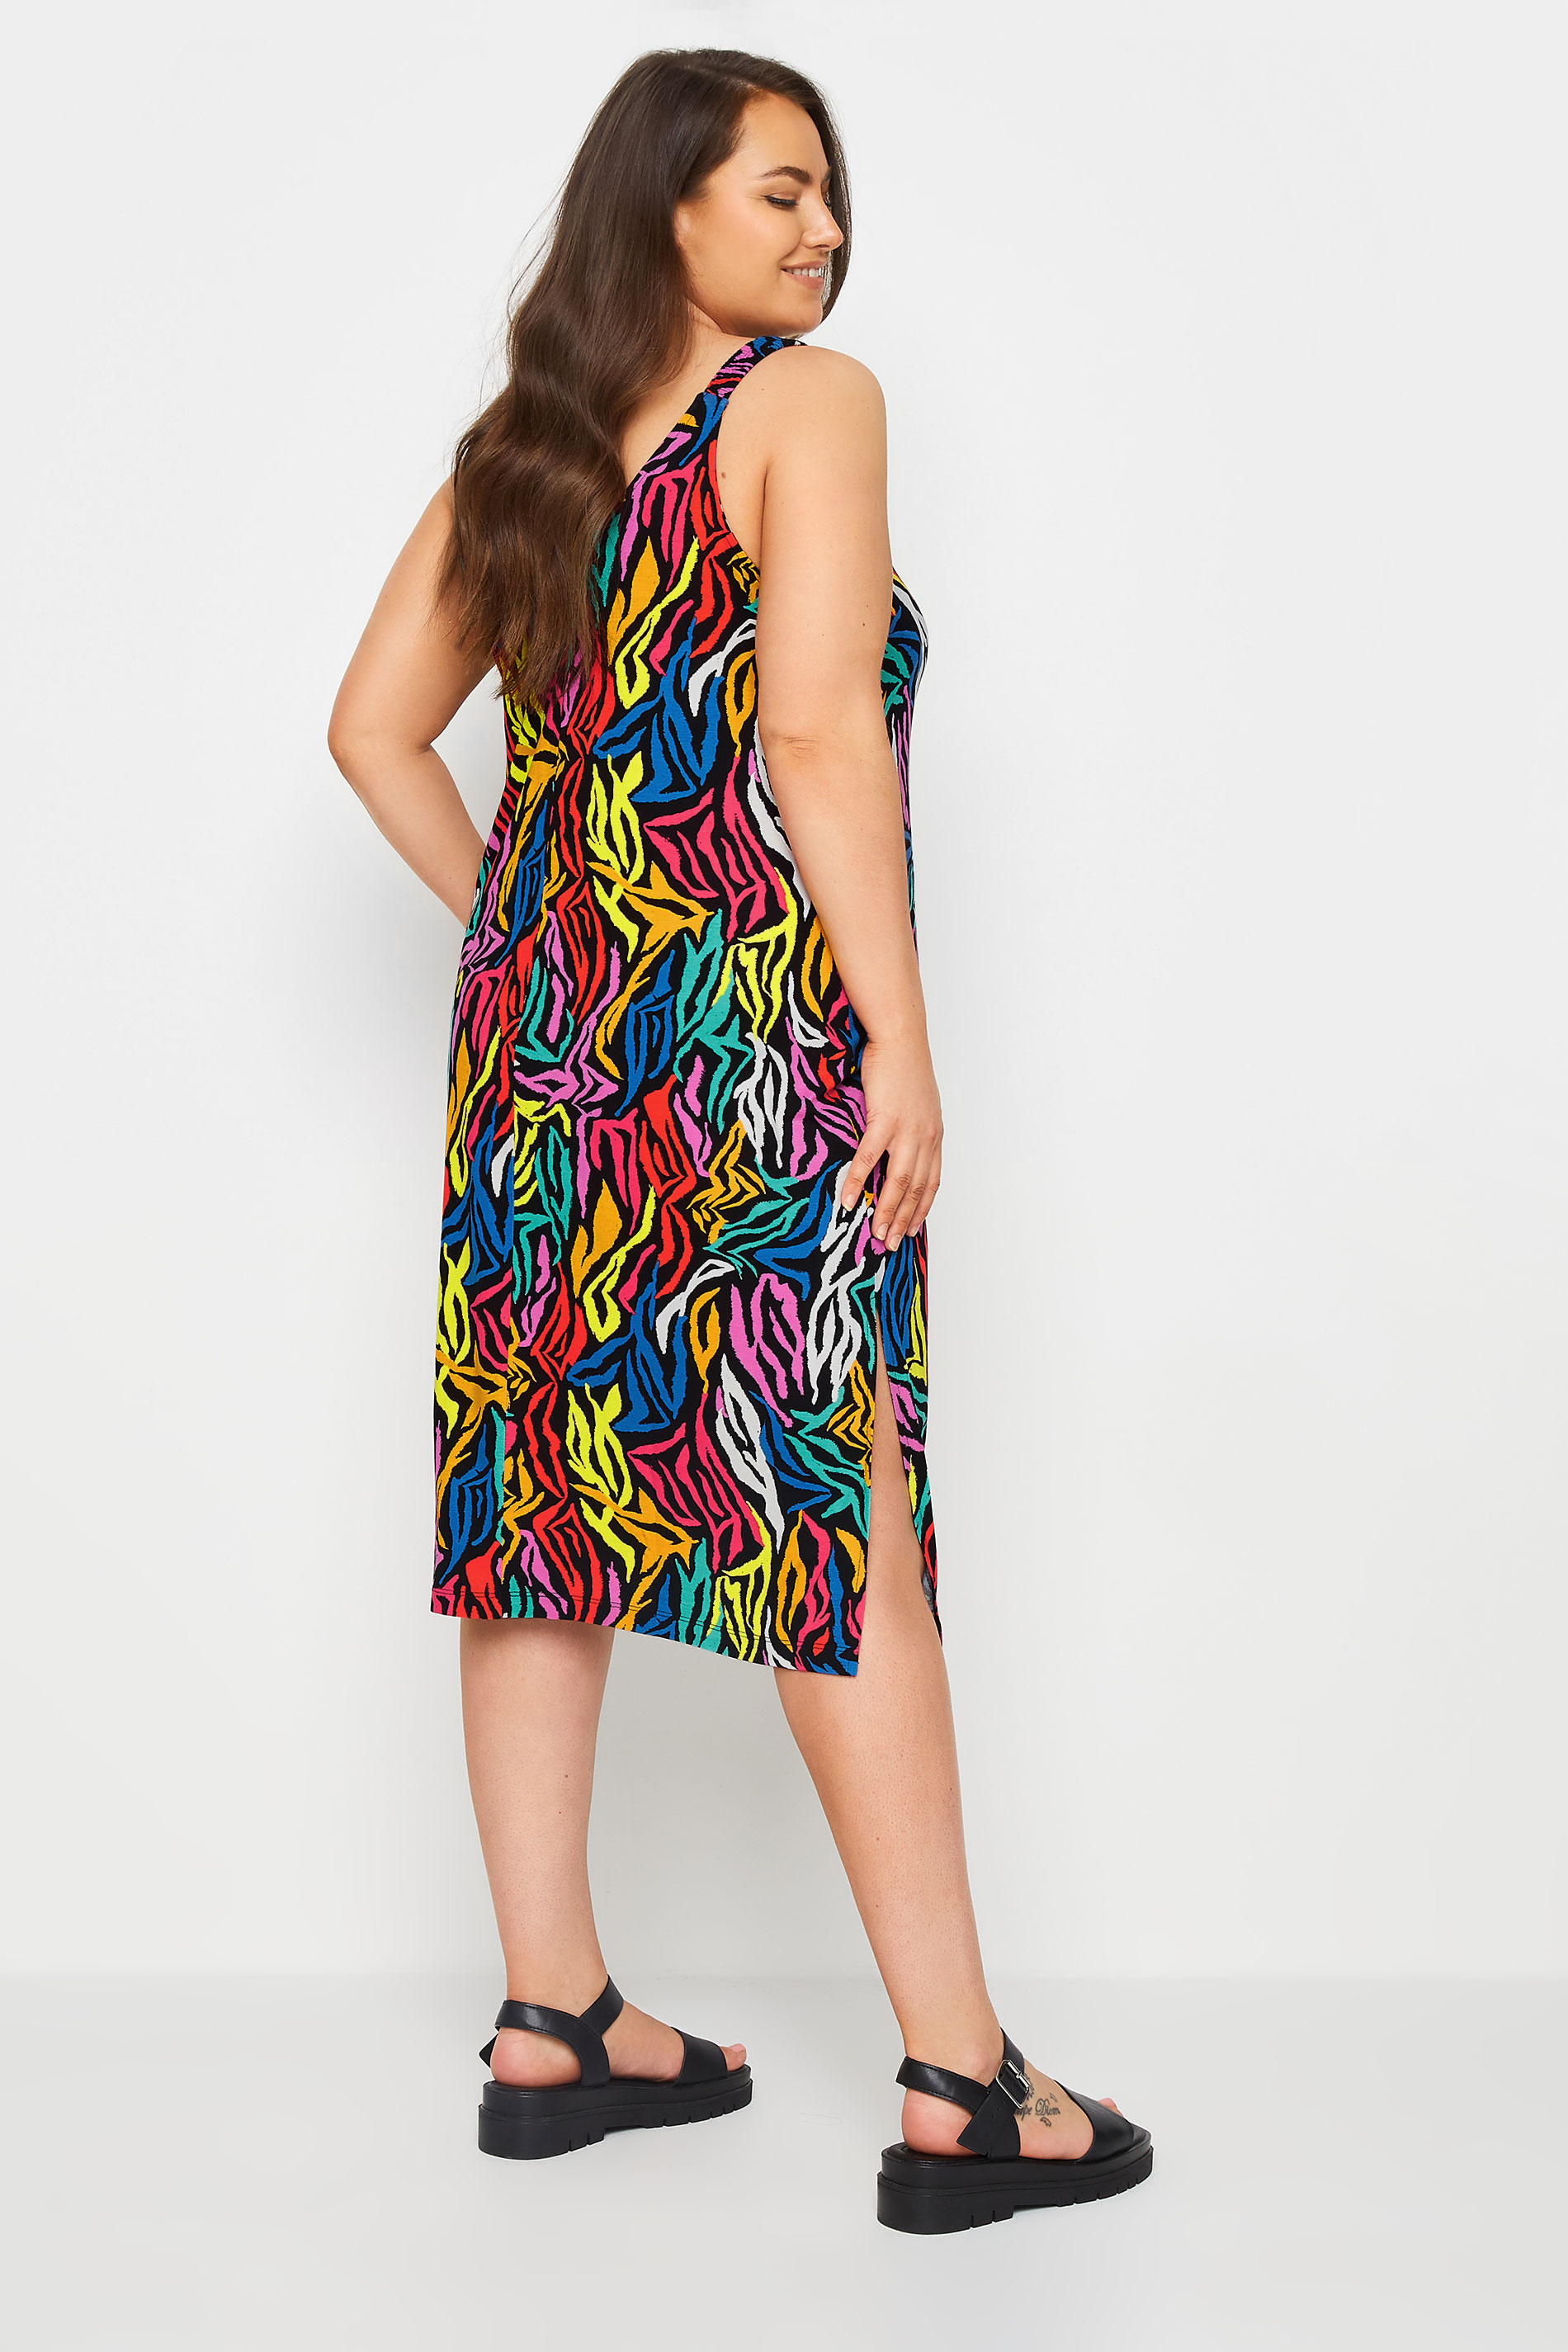 YOURS Plus Size Black Rainbow Zebra Print Beach Dress | Yours Clothing 3